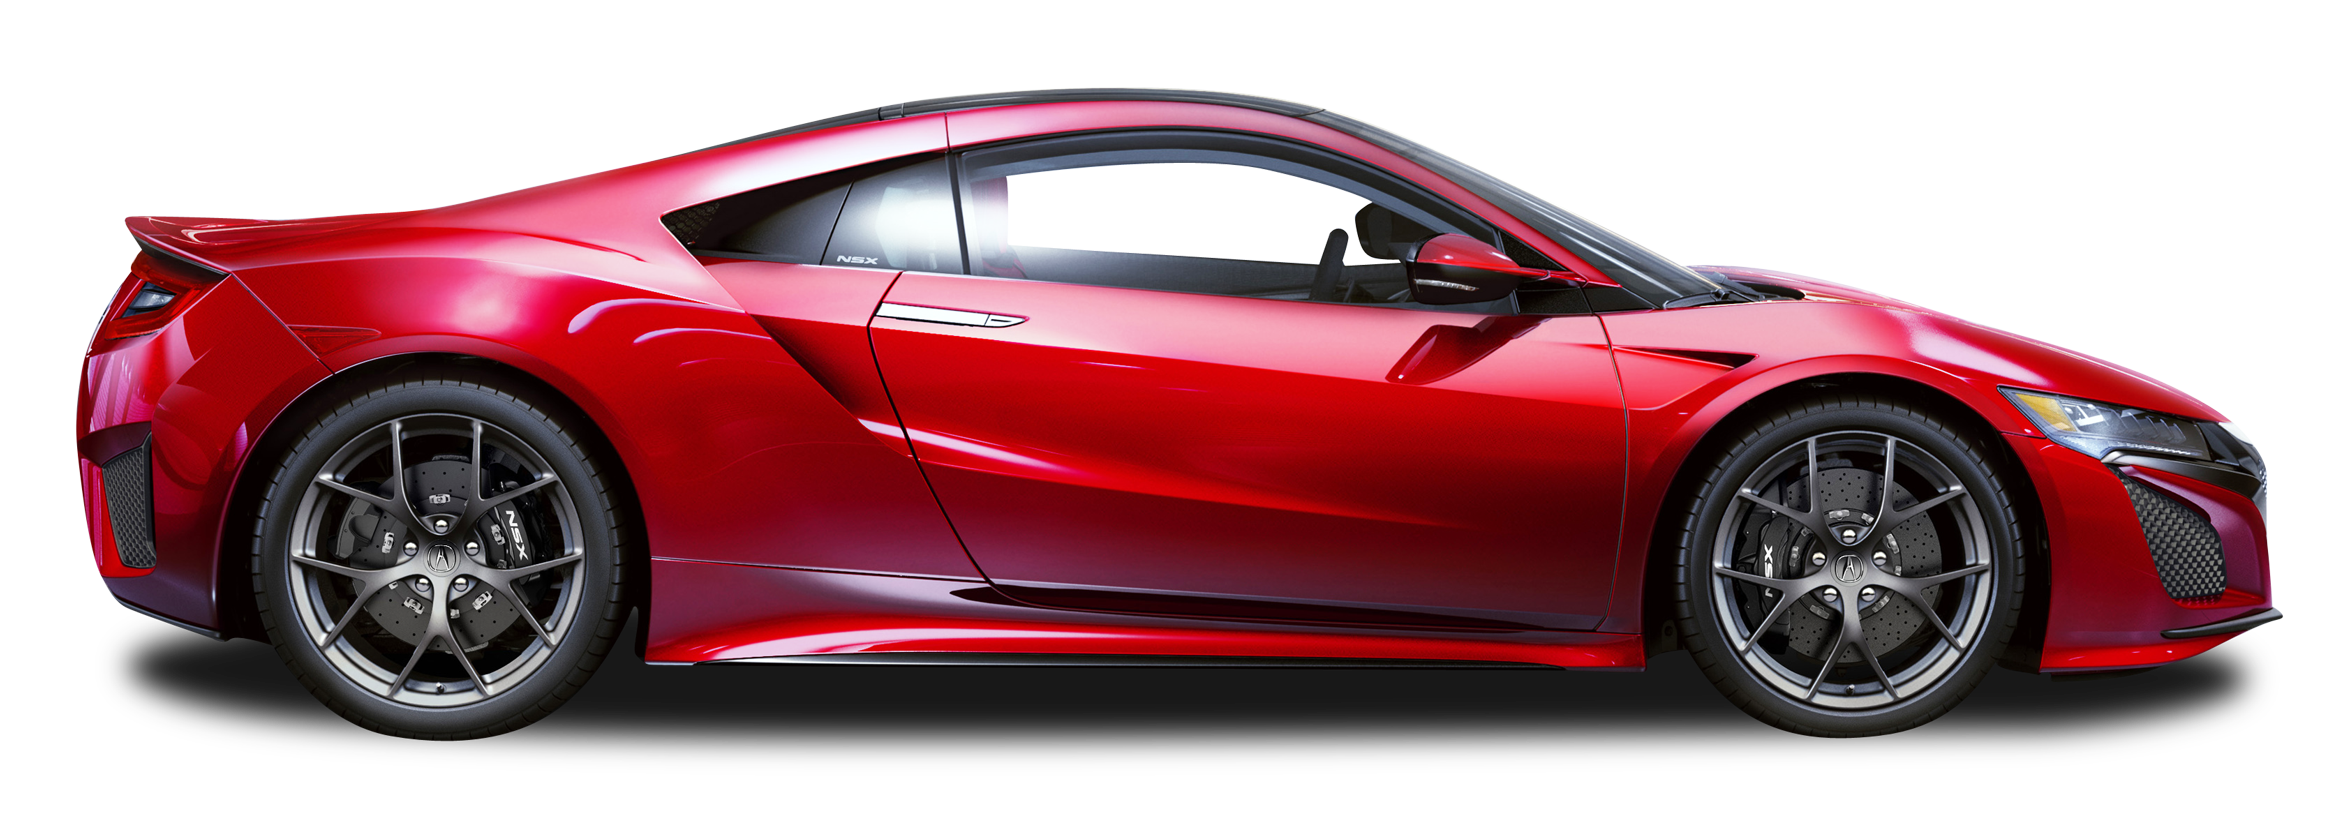 Red Acura NSX Car